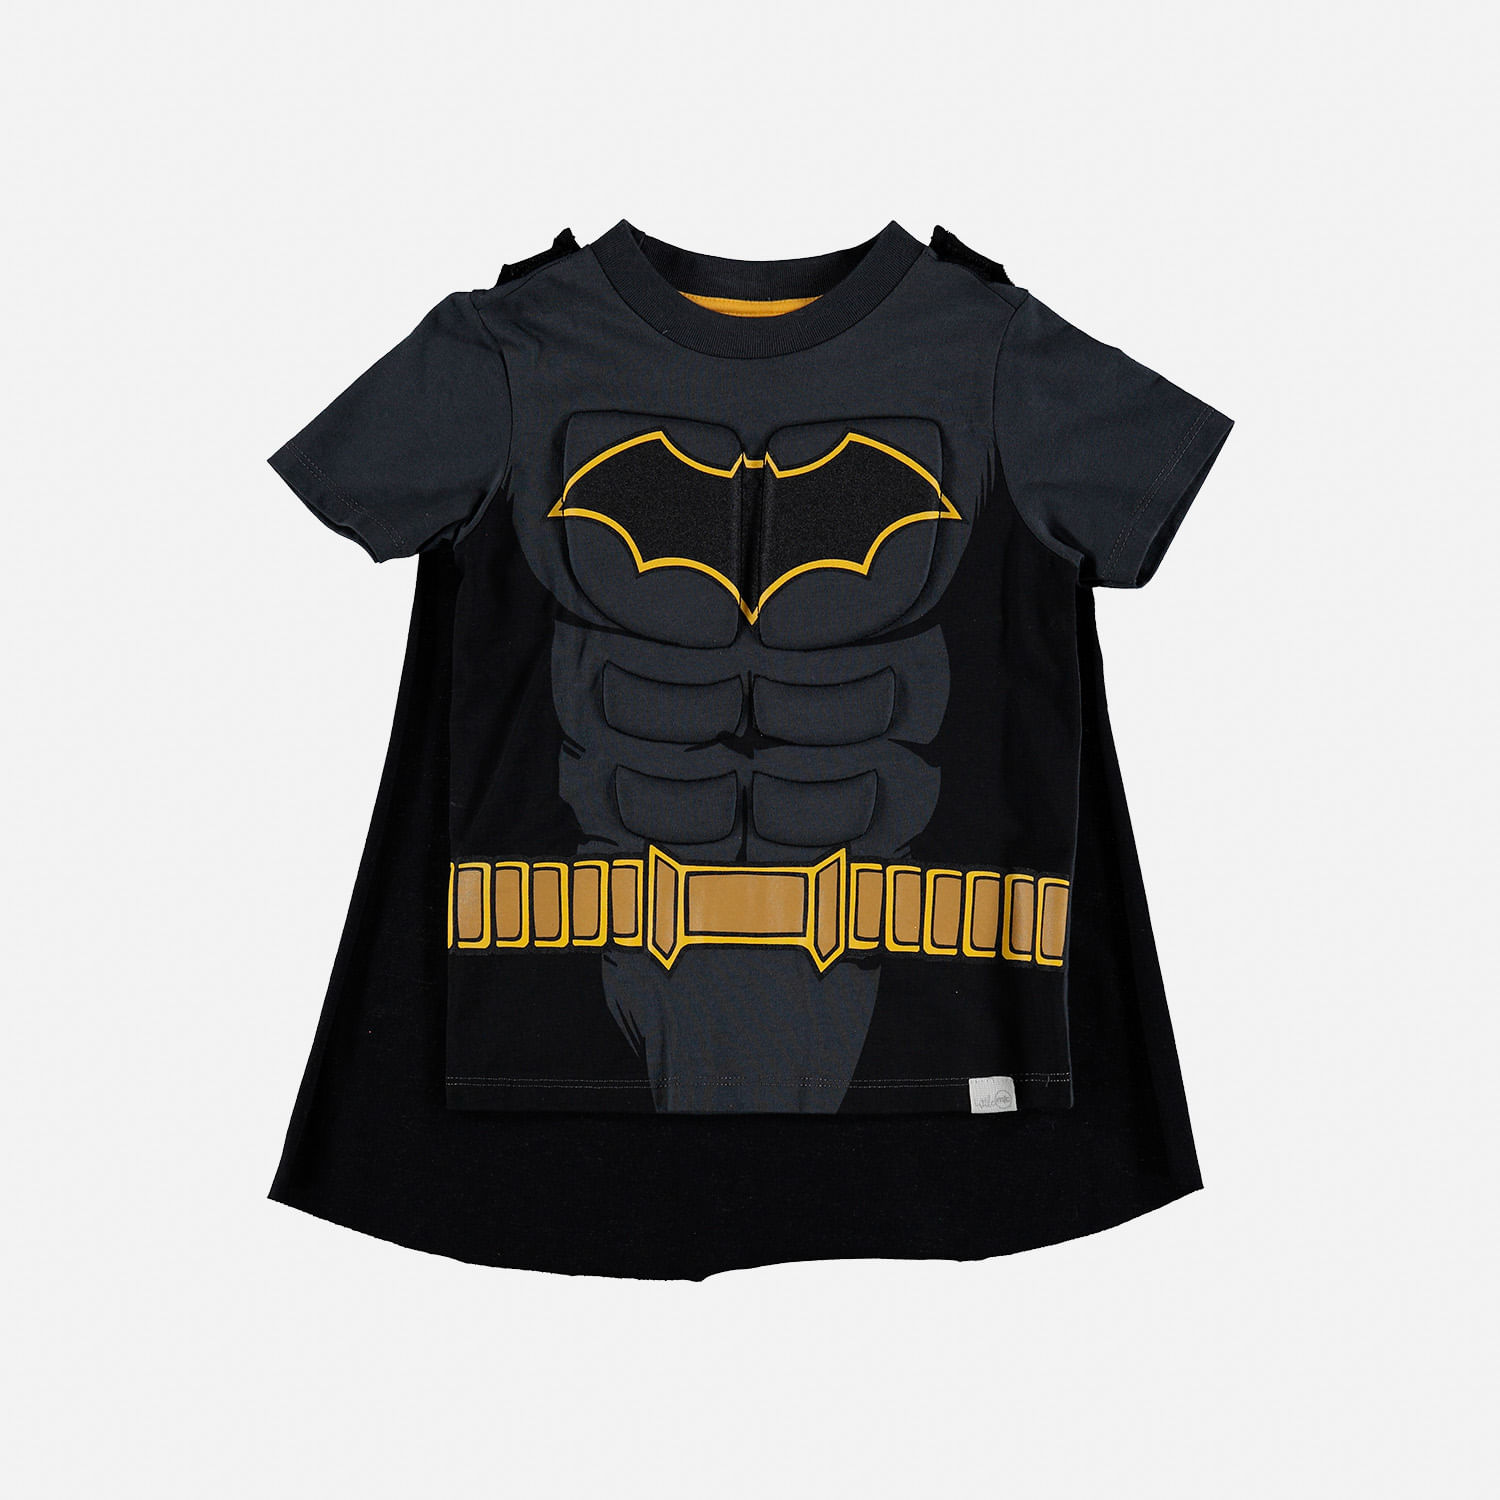 Camiseta de Batman con capa removible para niño de 2T a 5T - Online